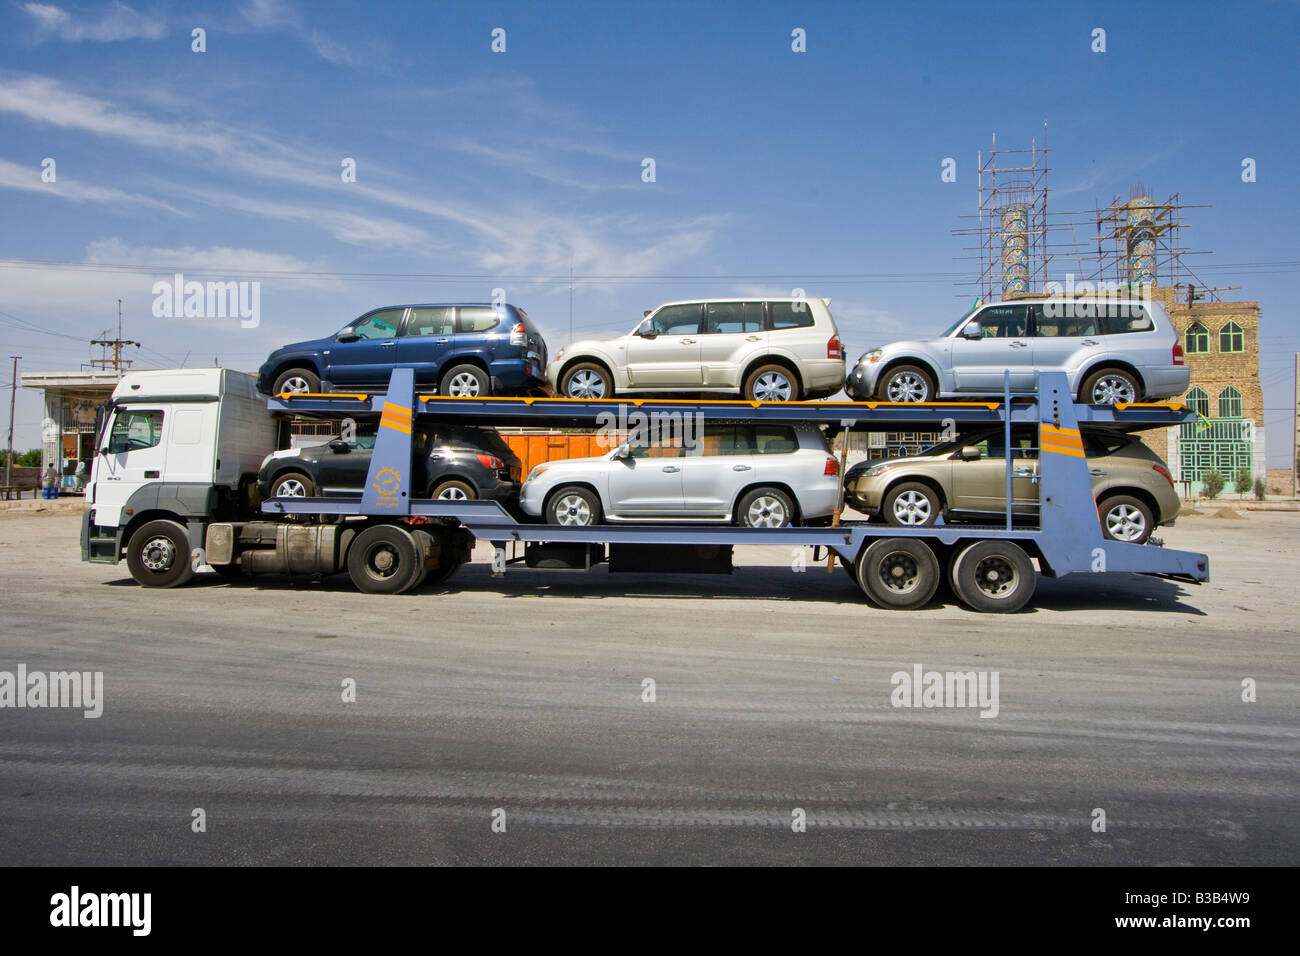 New Nissan SUVs Loaded on a Truck Near Yazd Iran Stock Photo